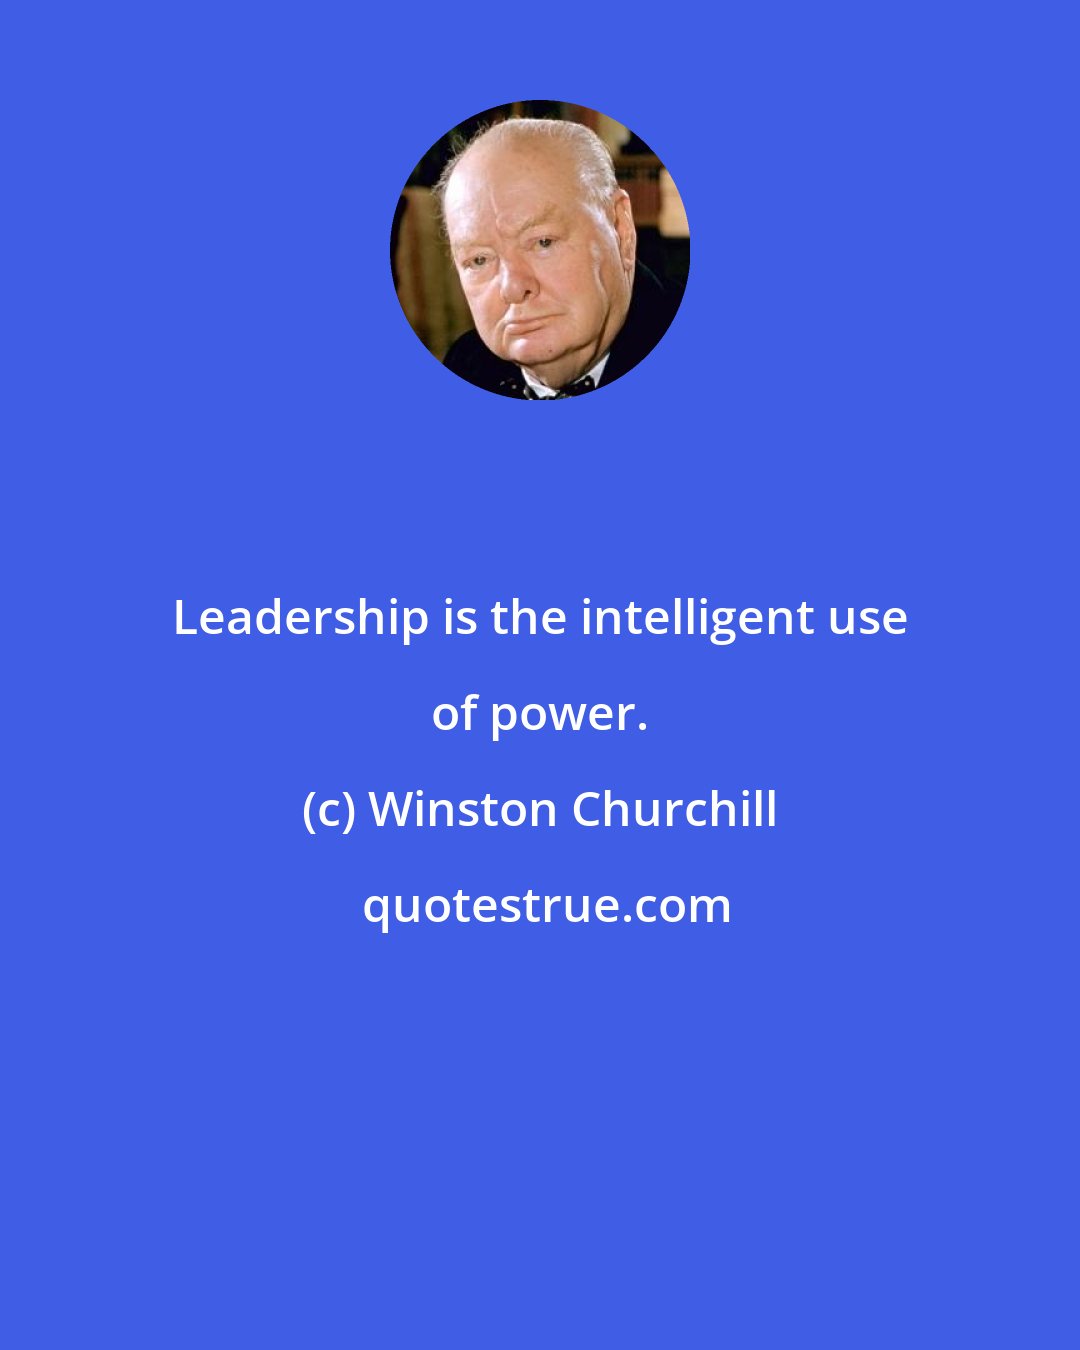 Winston Churchill: Leadership is the intelligent use of power.